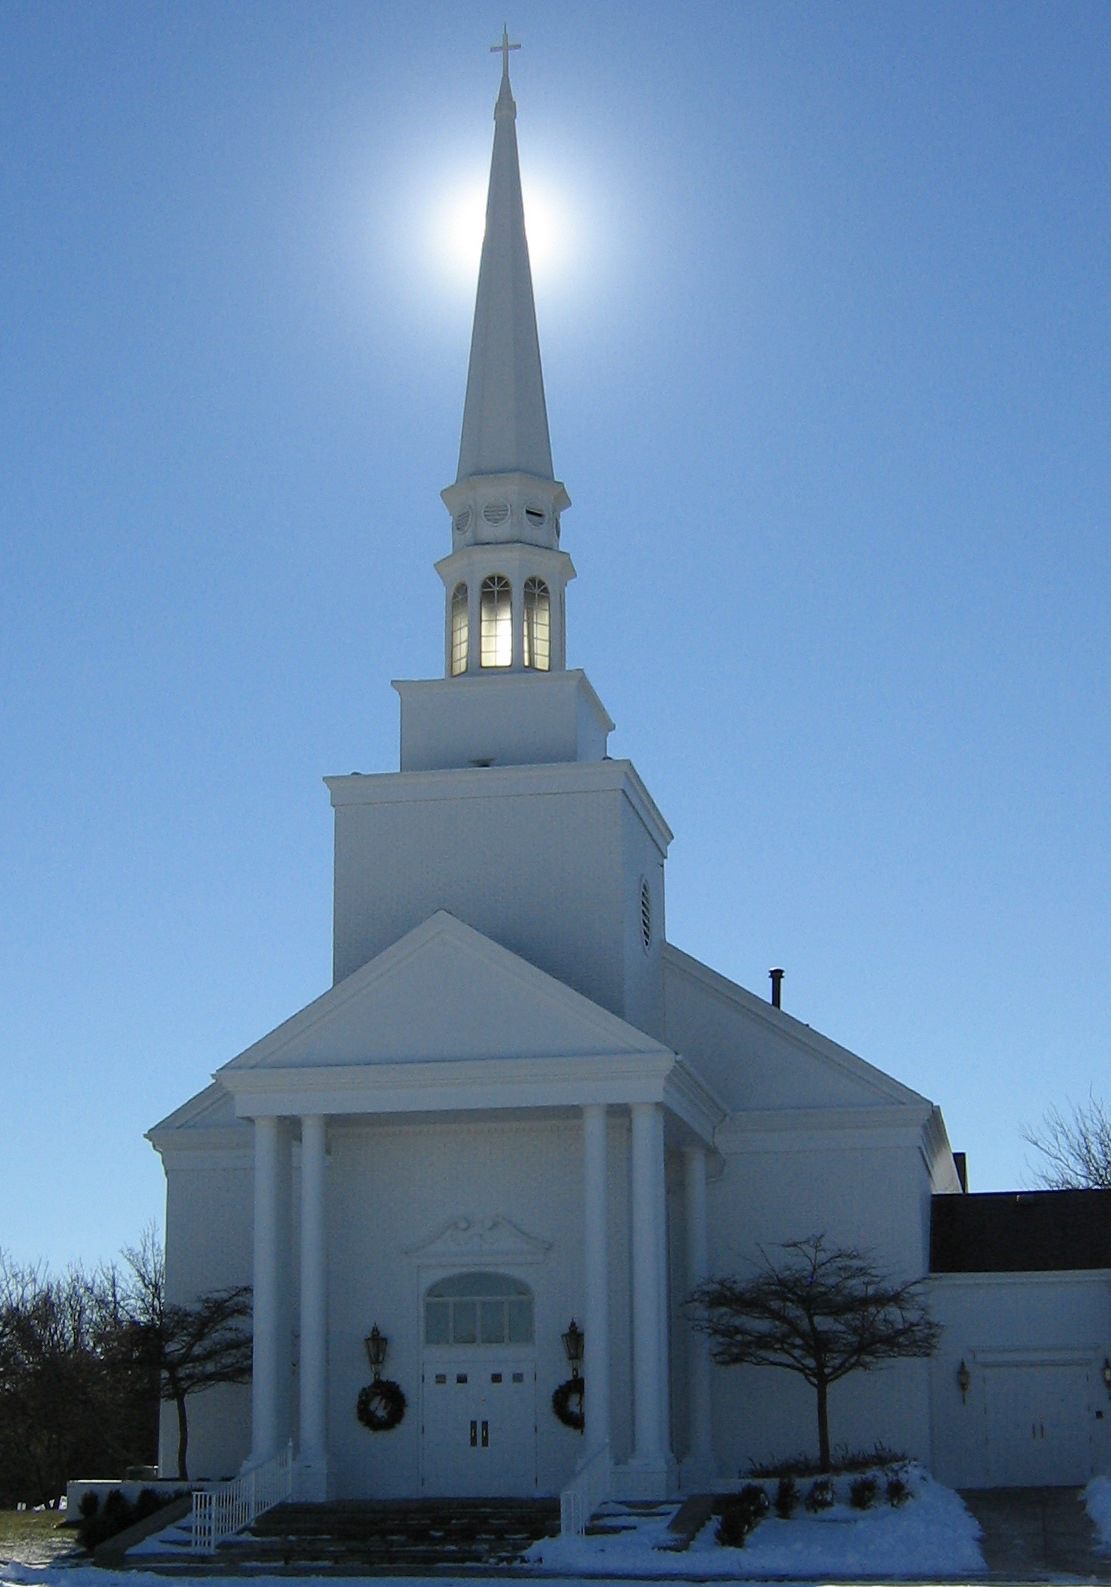 University Congregational Church